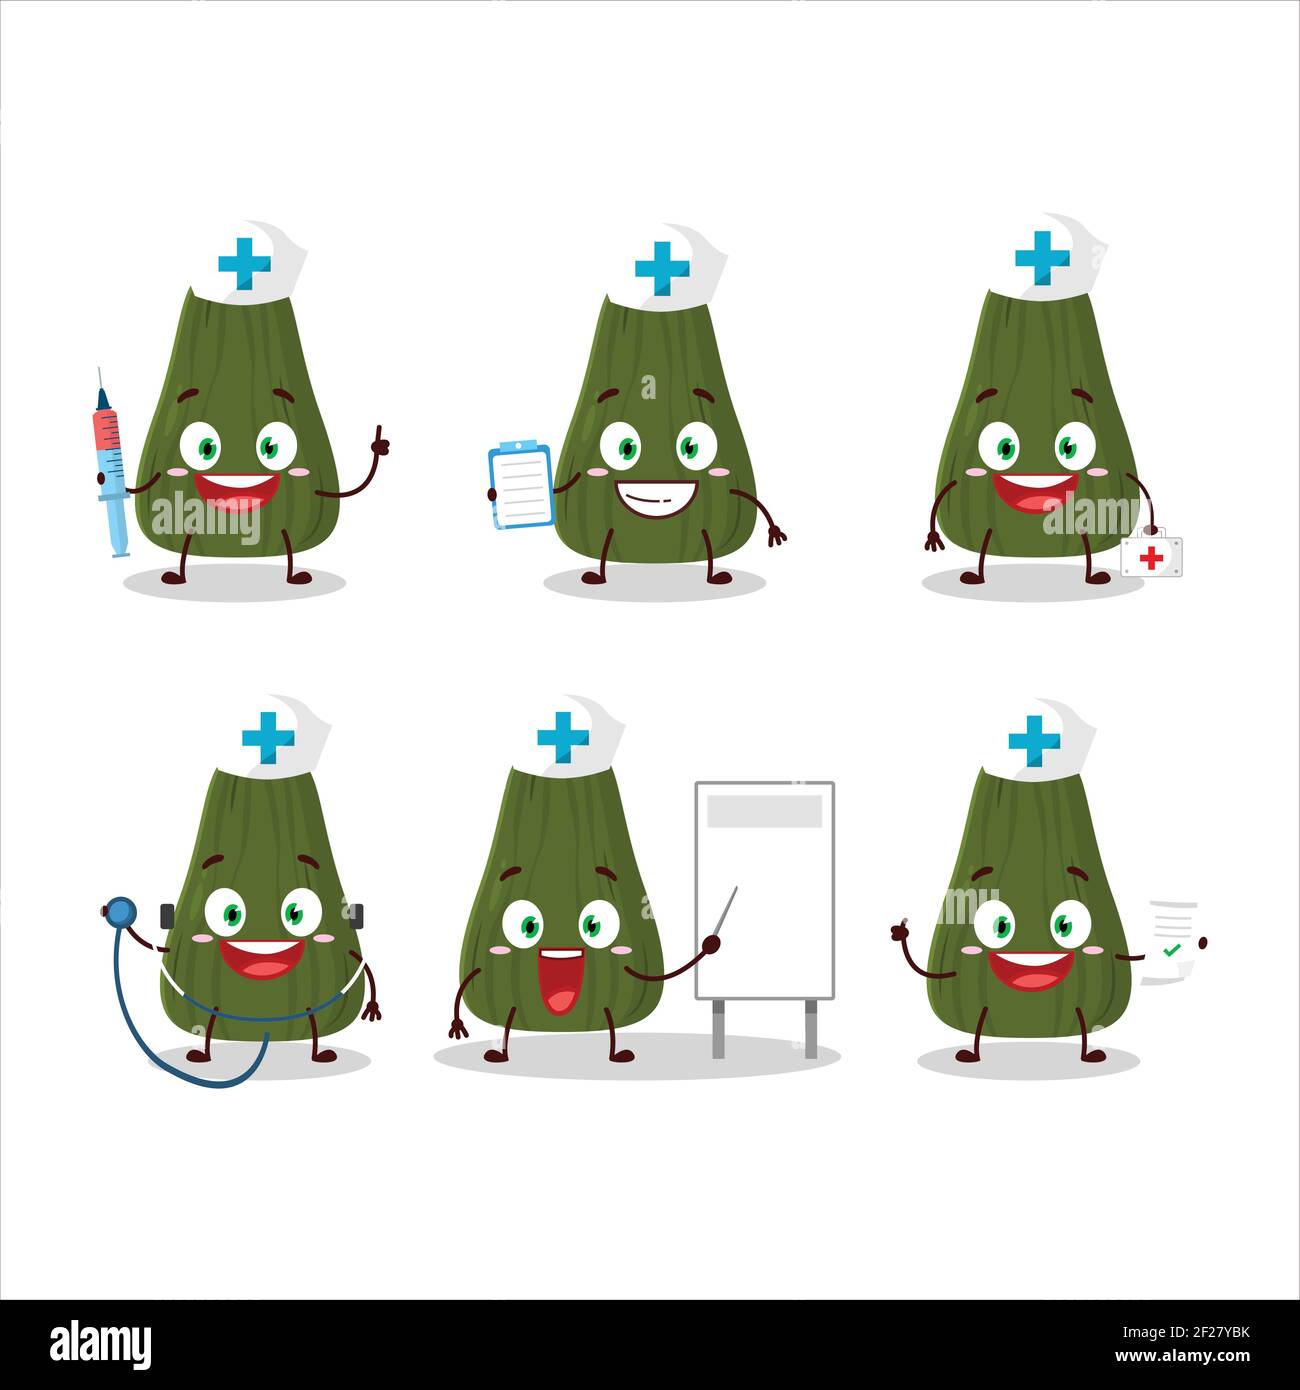 https://c8.alamy.com/comp/2F27YBK/doctor-profession-emoticon-with-squash-cartoon-character-vector-illustration-2F27YBK.jpg